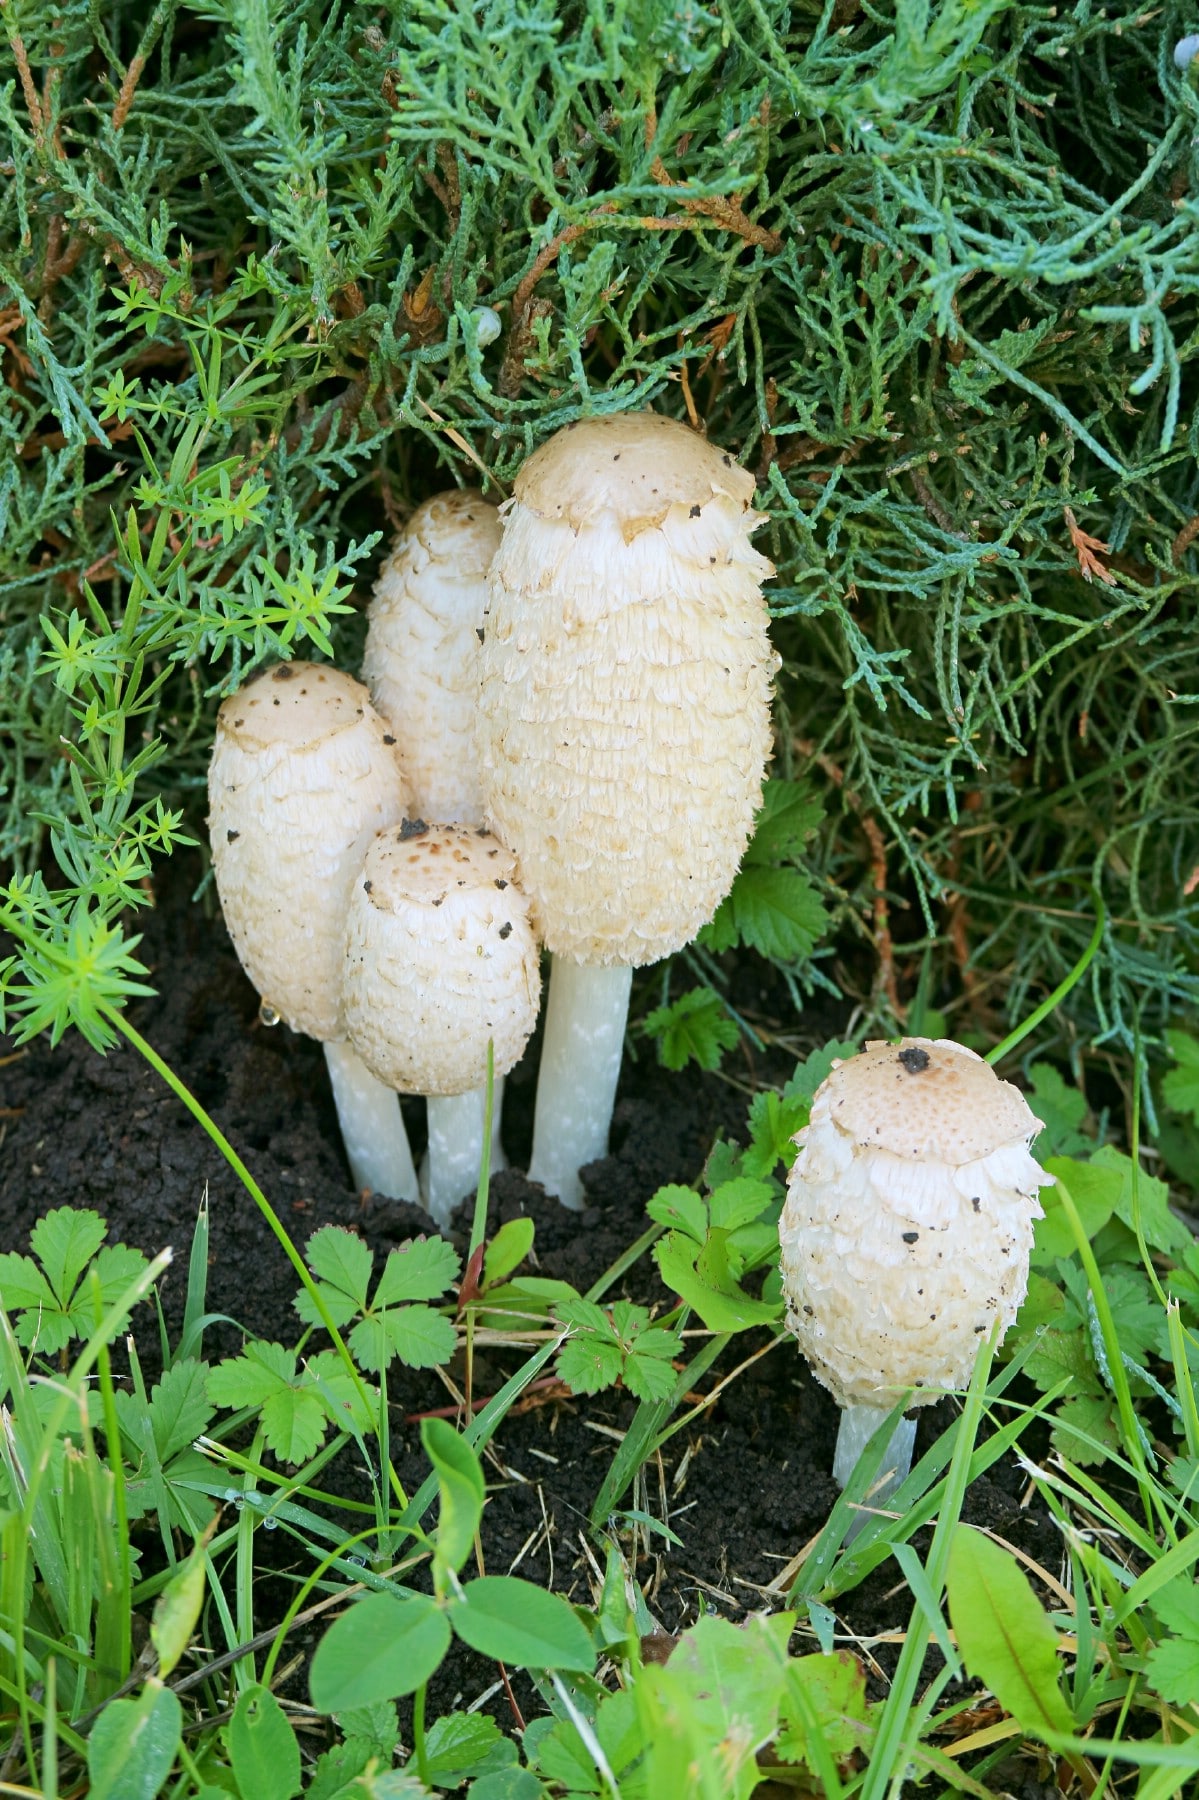 Several shaggy mane mushrooms